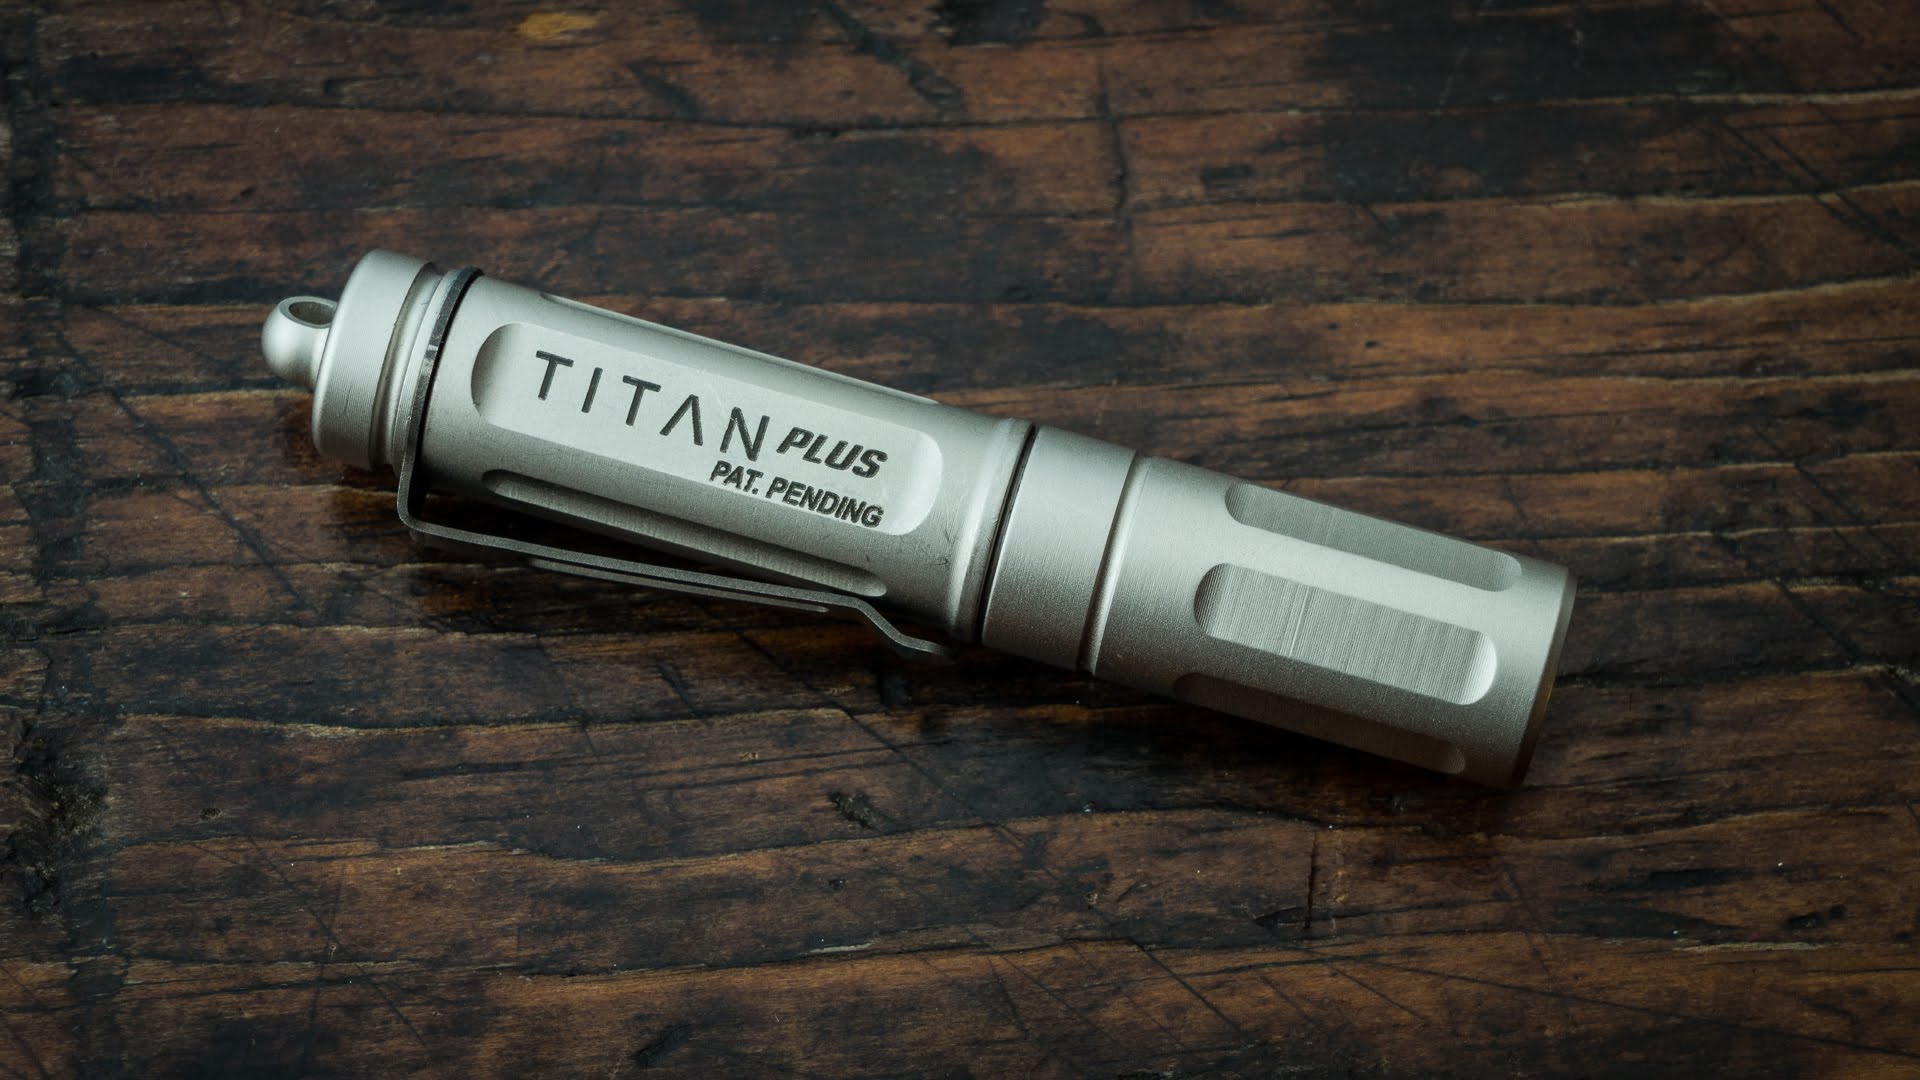 Surefire titan plus edc flashlight